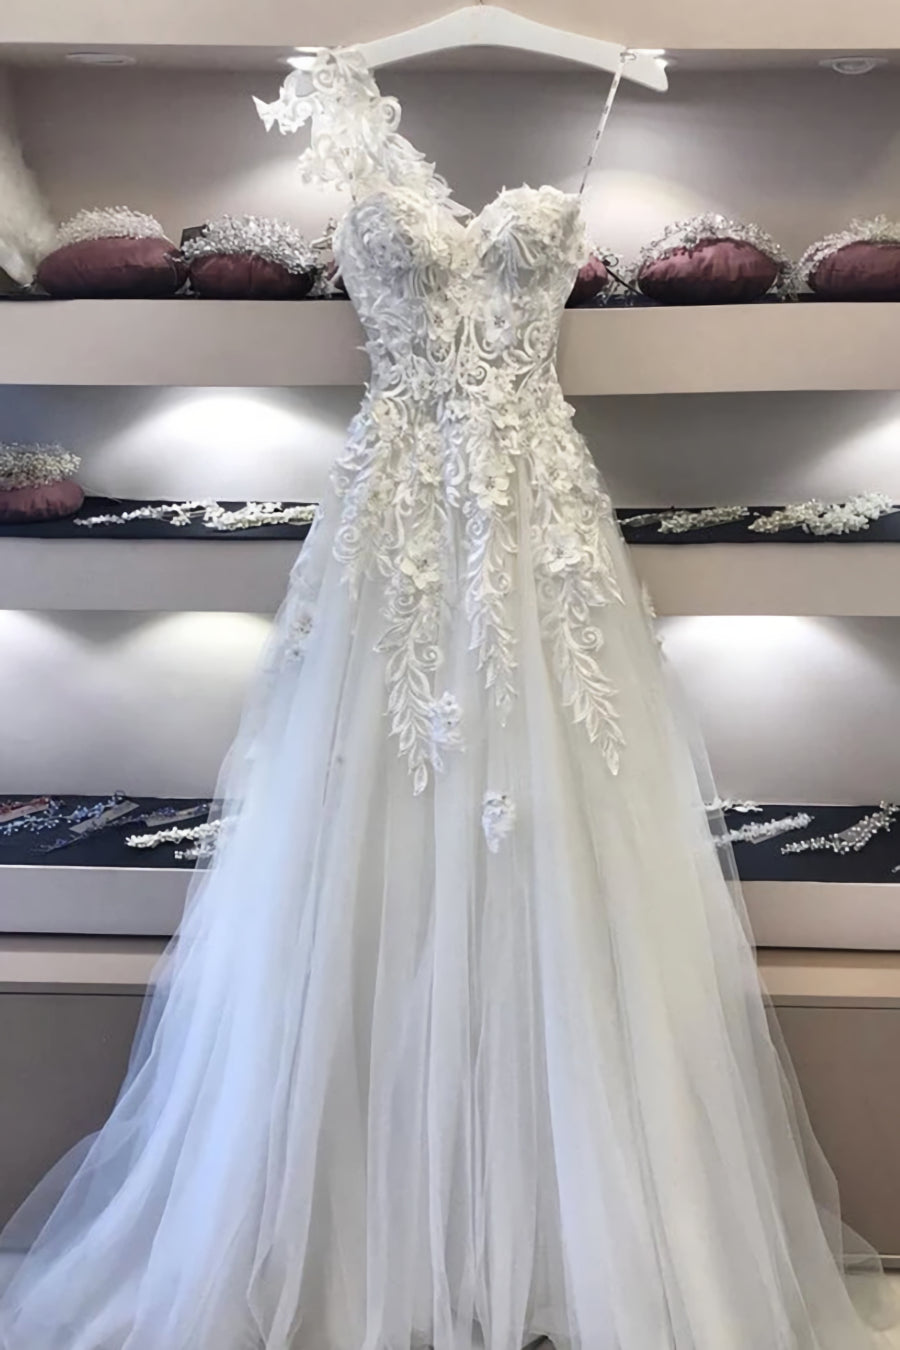 Long White Sweetheart Neck Lace Applique Corset Prom Dress, Evening Dresses outfit, Bridesmaid Dresses Wedding